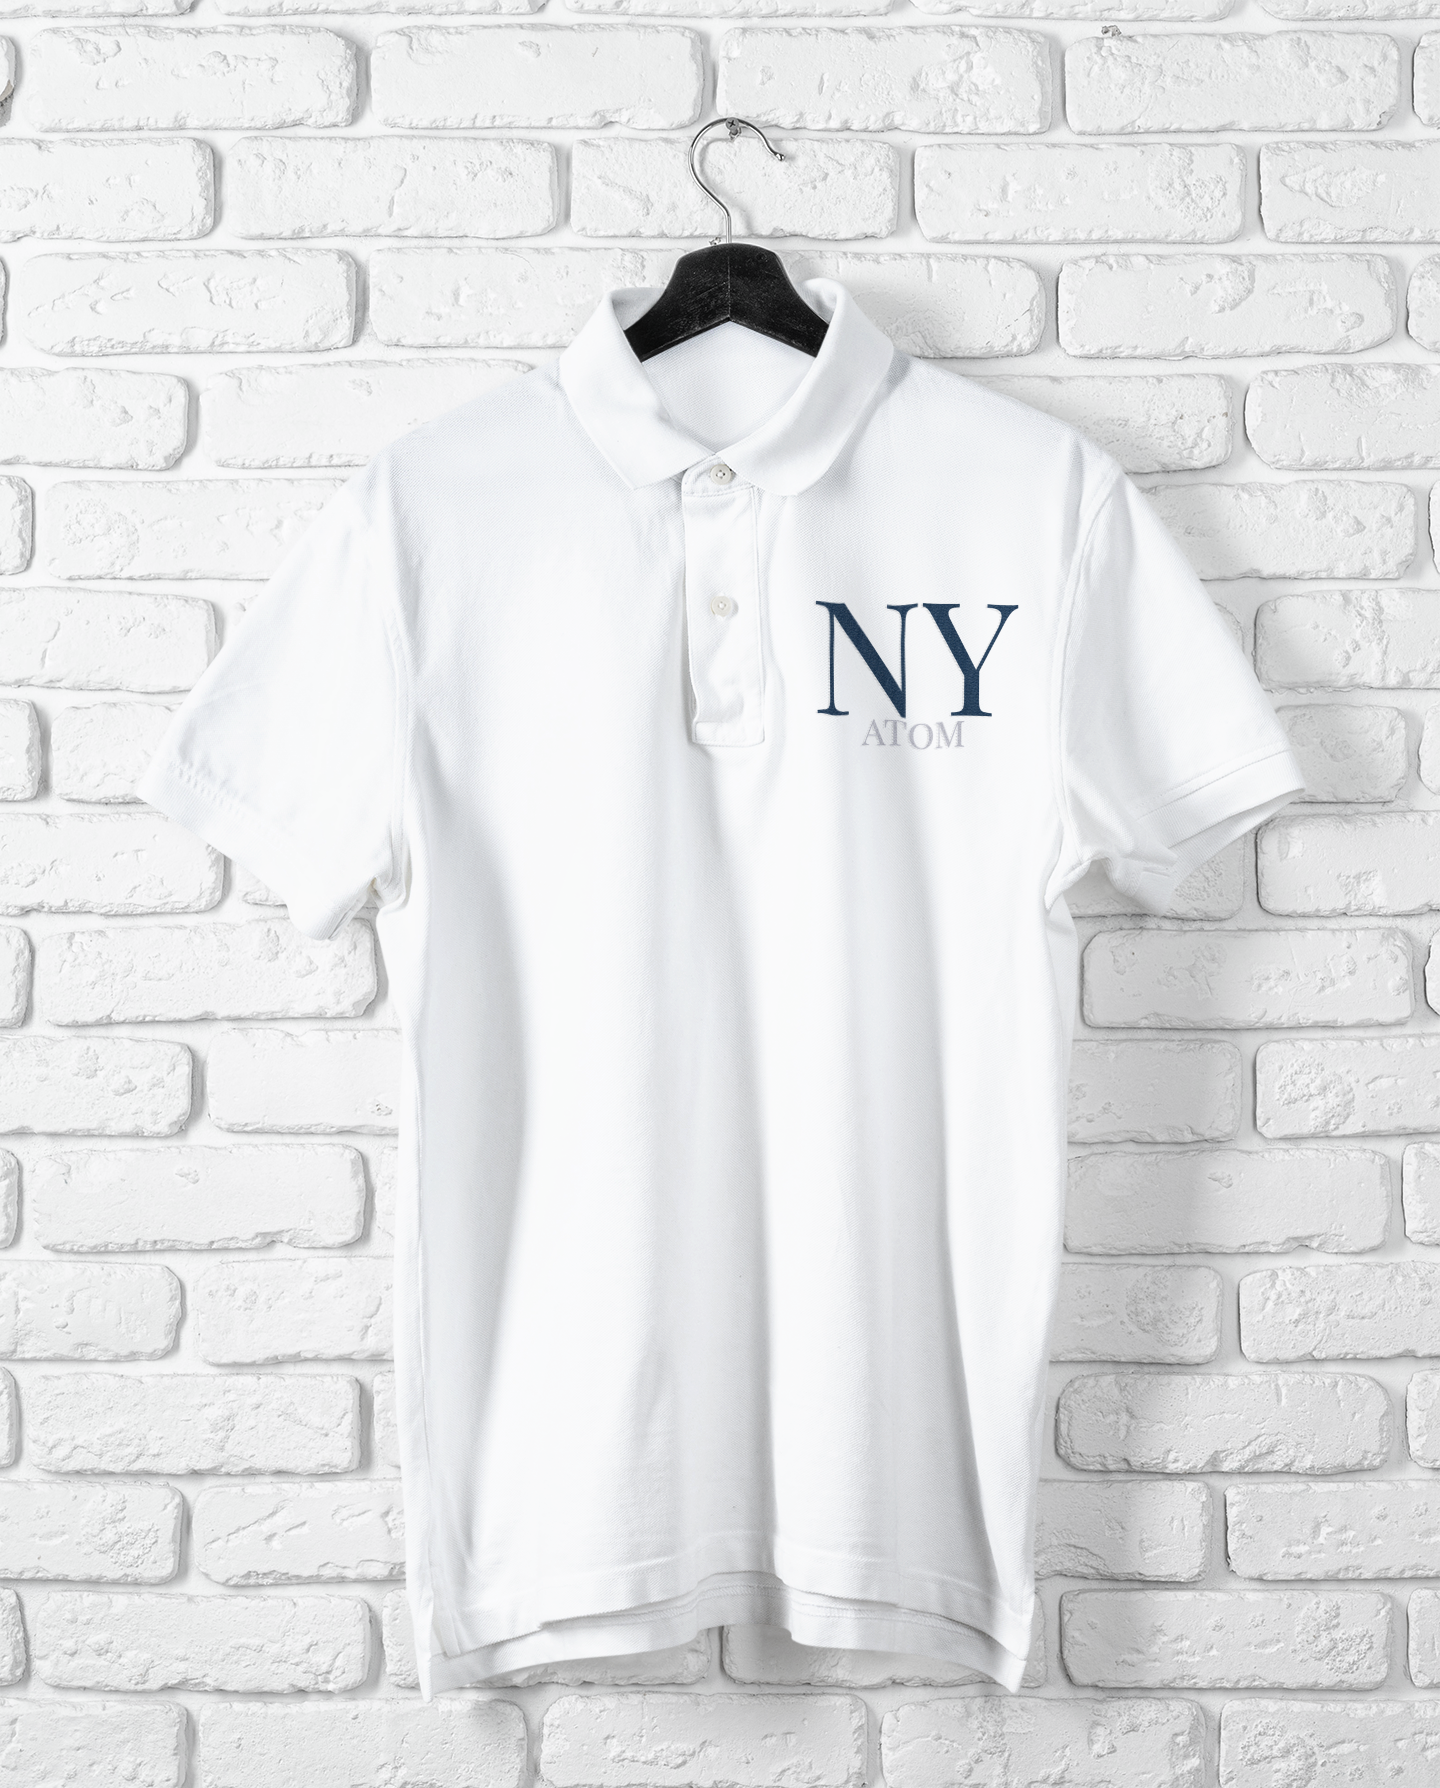 NY ATOM Embroidered White Polo Neck T-Shirt For Men